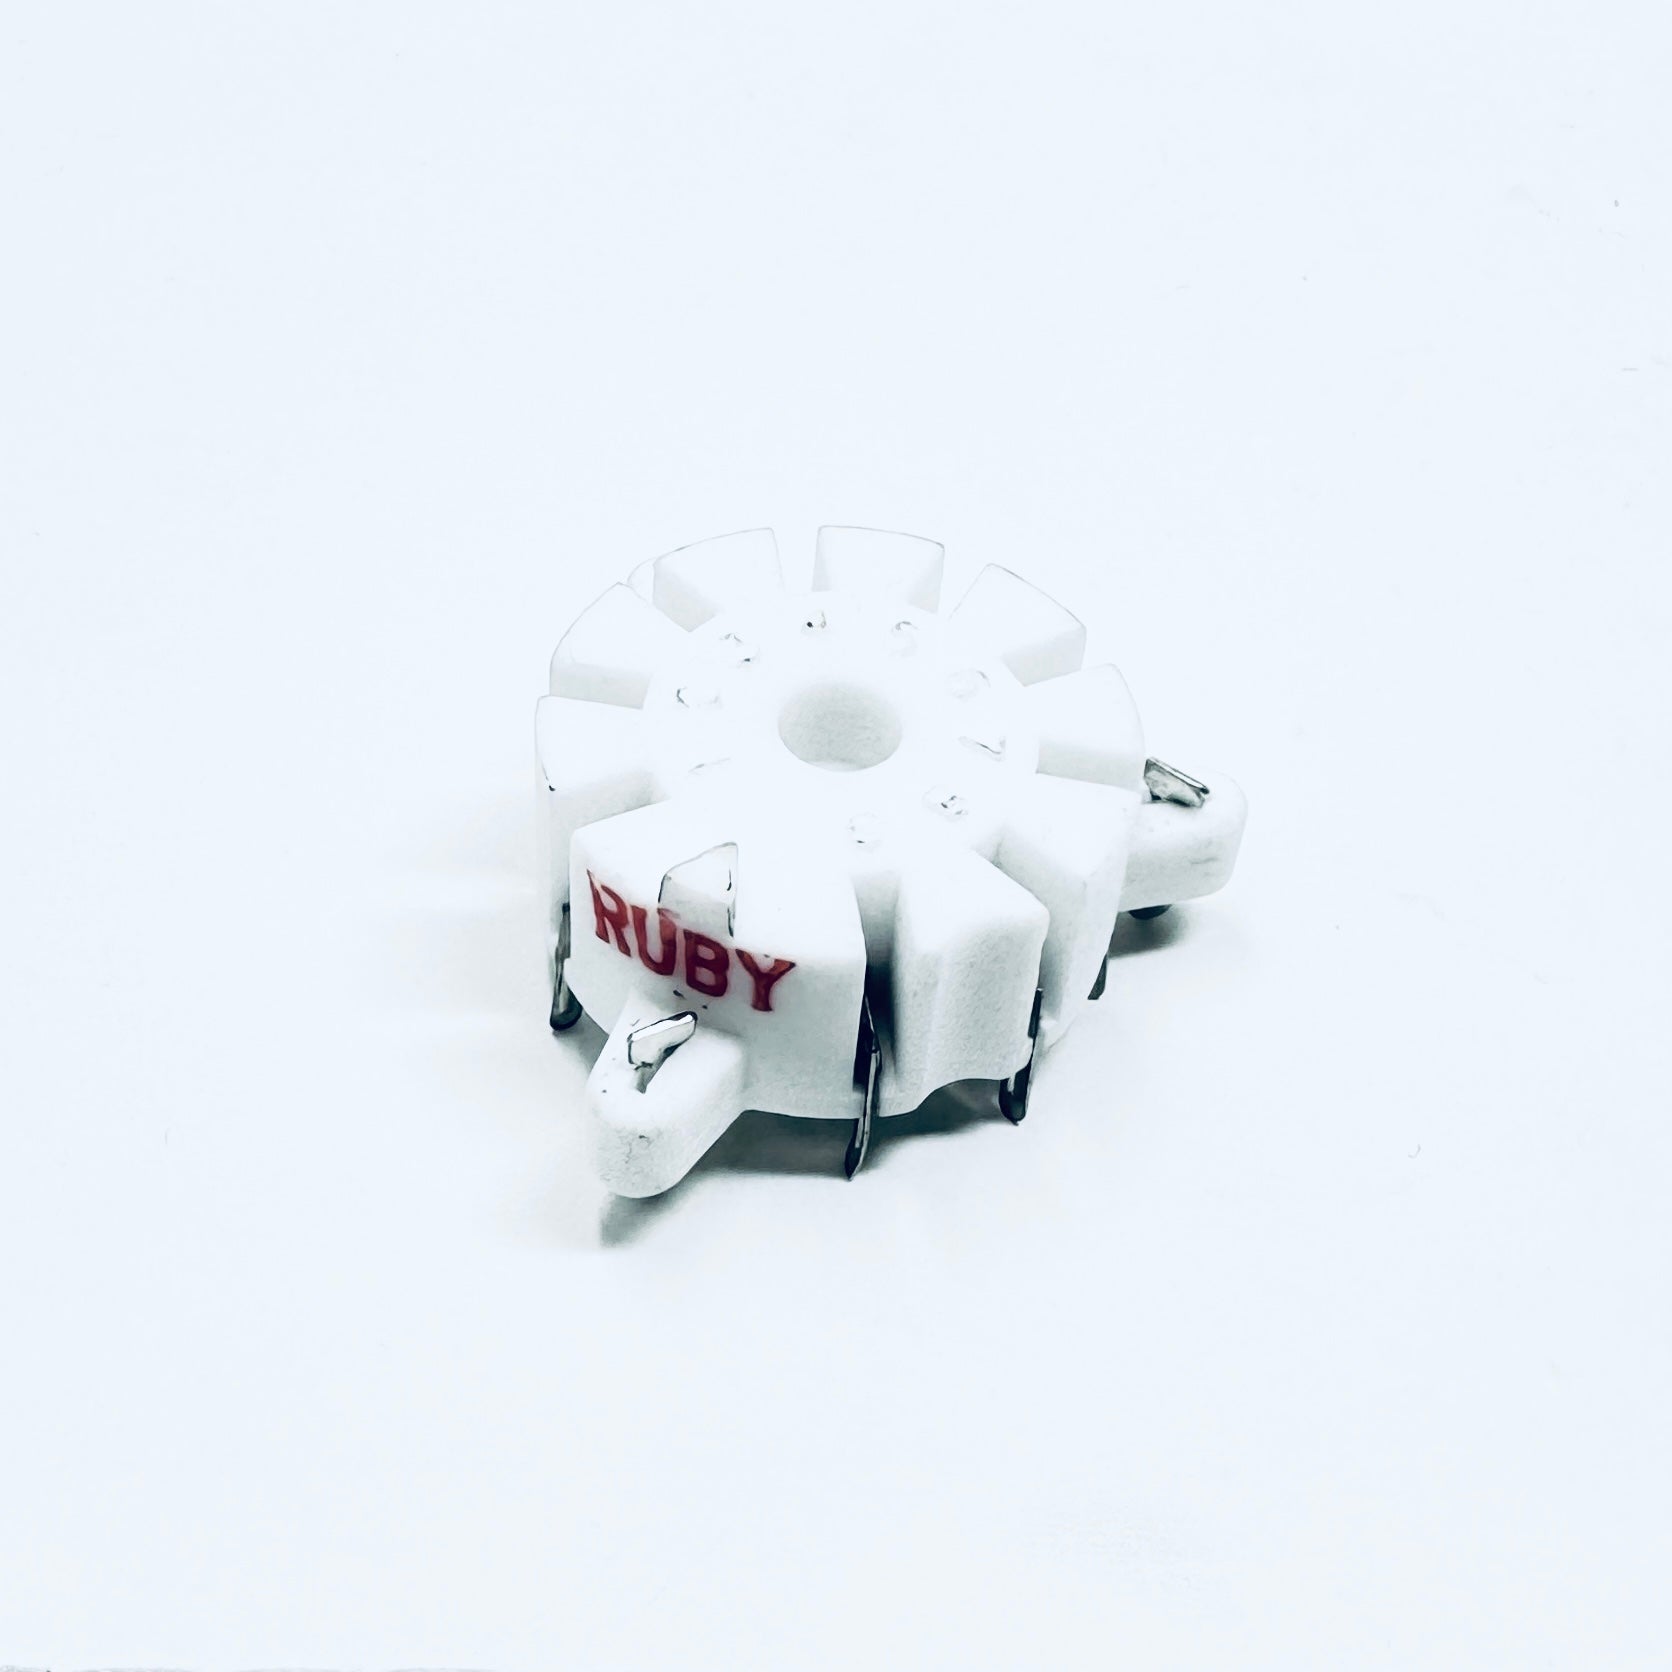 Ceramic 9 Pin Reverse Socket - TUS9PC9C, ruby sockets, cermaic, reverse socket